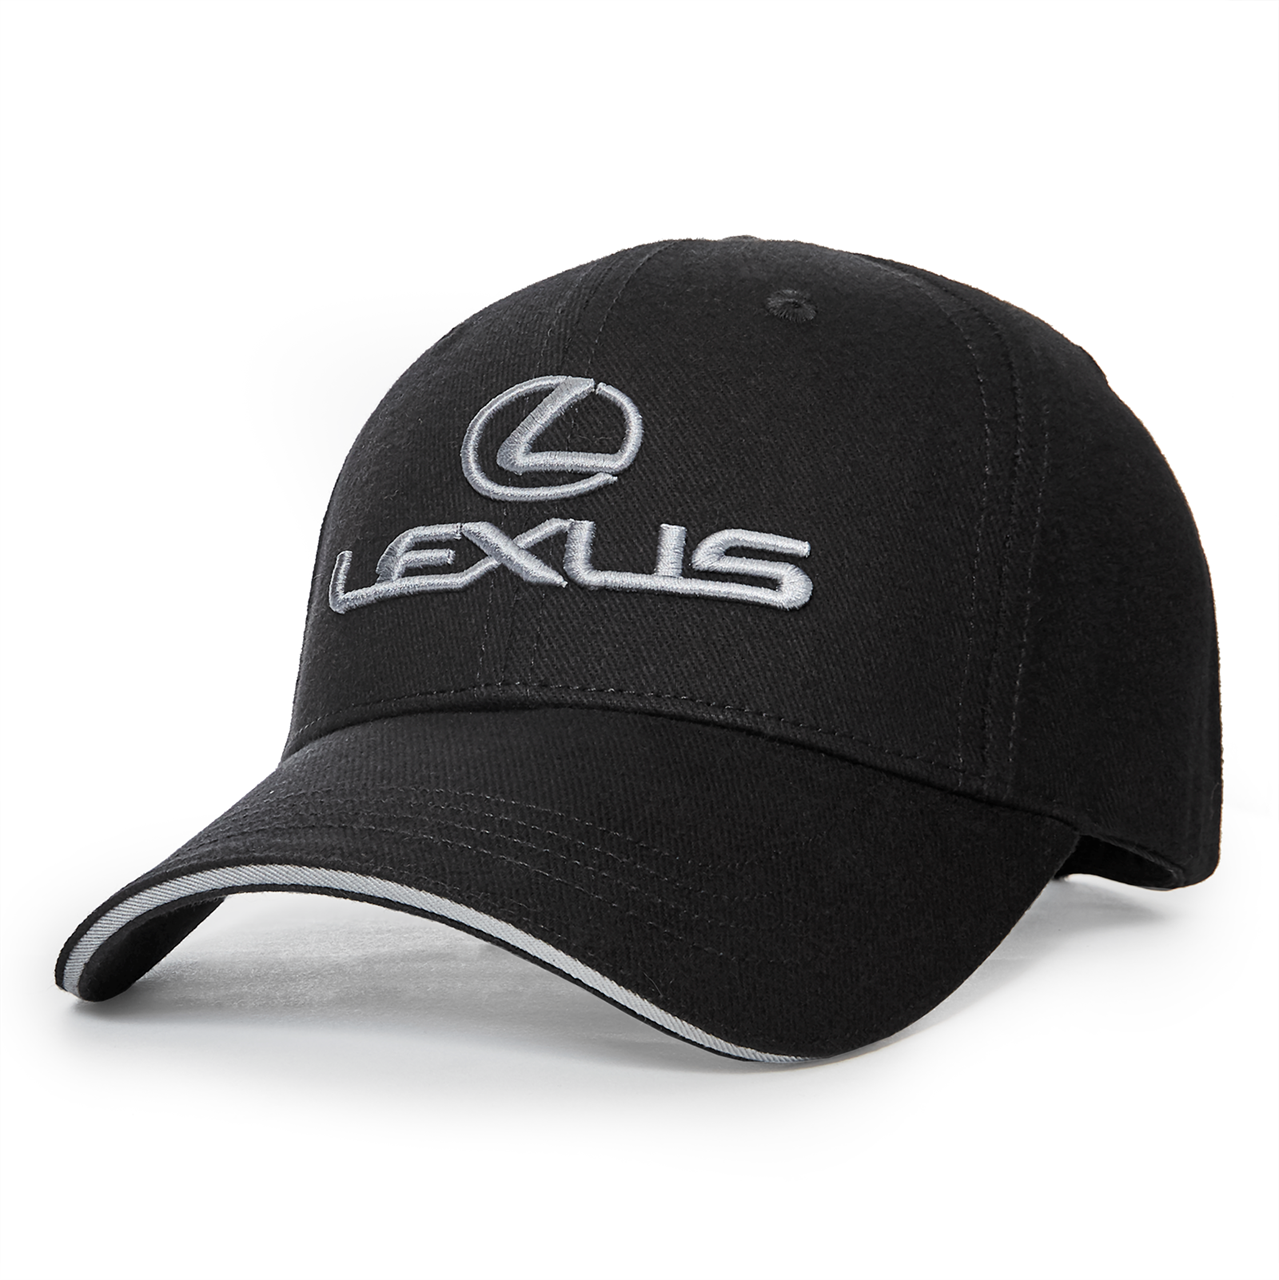 Hat auto. Мужские бейсболки с логотипом Lexus. Кепка мужская Лексус. Бейсболка Lexus yet. Шапка мужская Lexus.